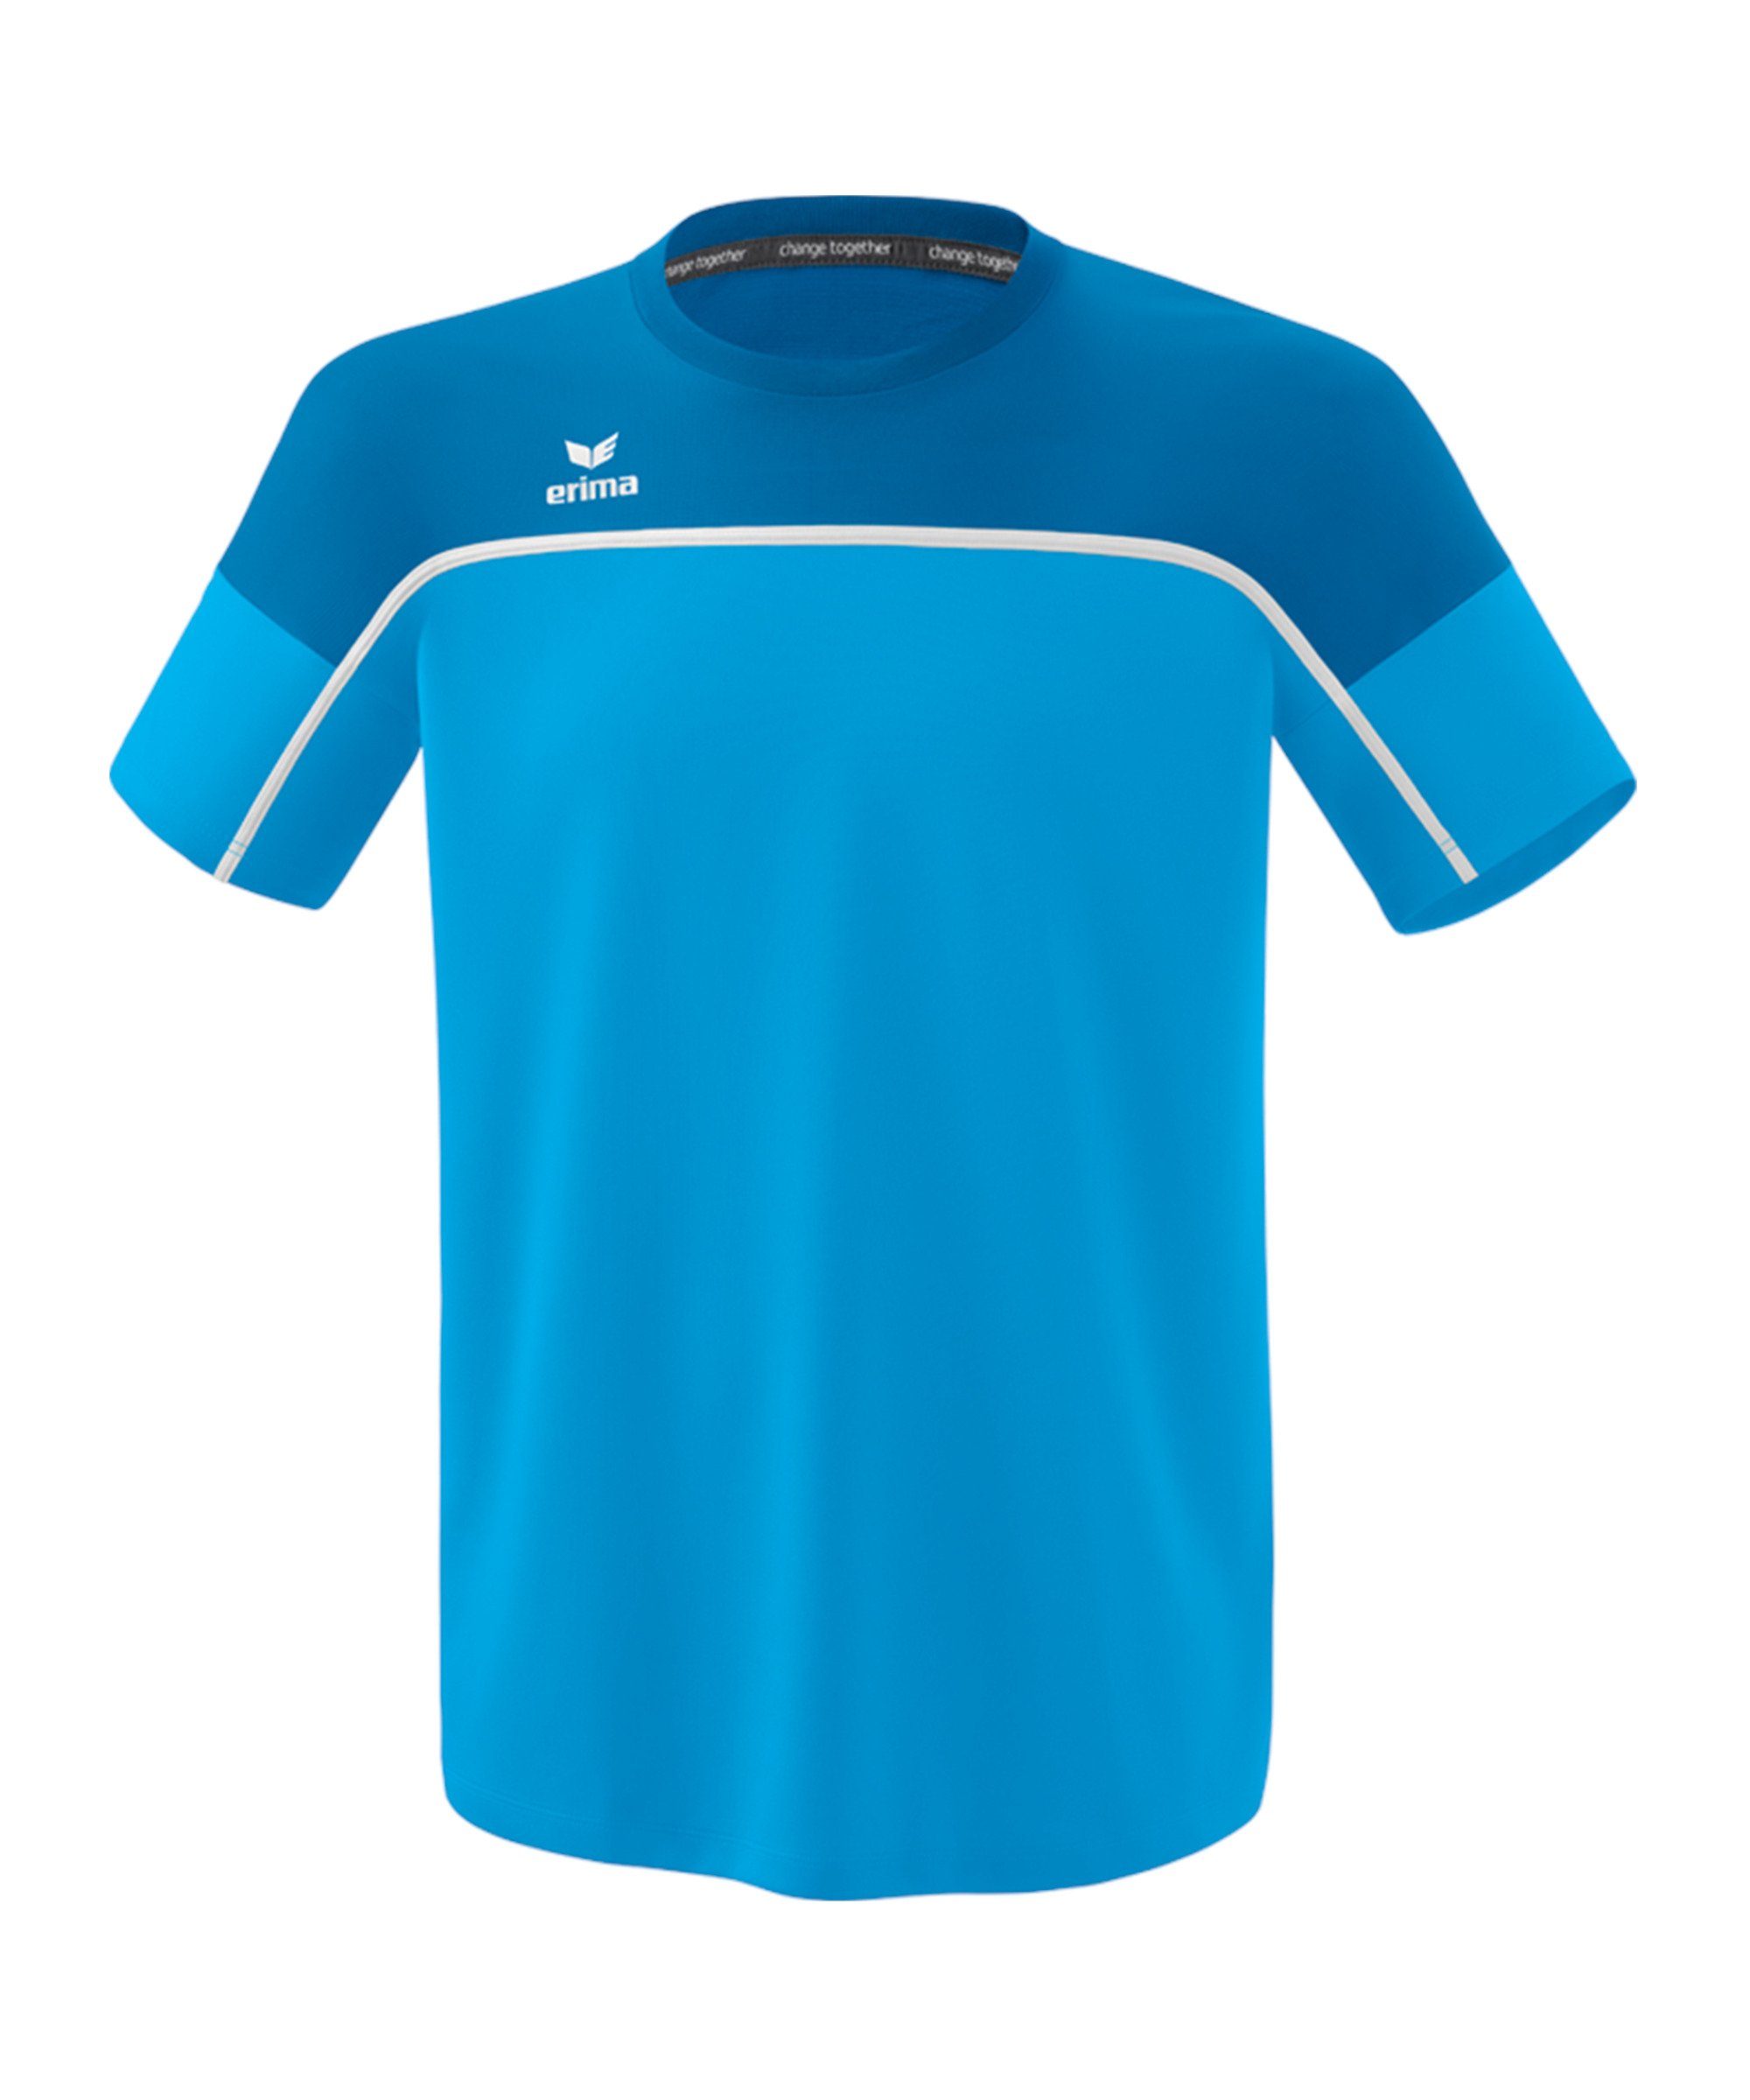 Erima T-Shirt Change T-Shirt default blau by